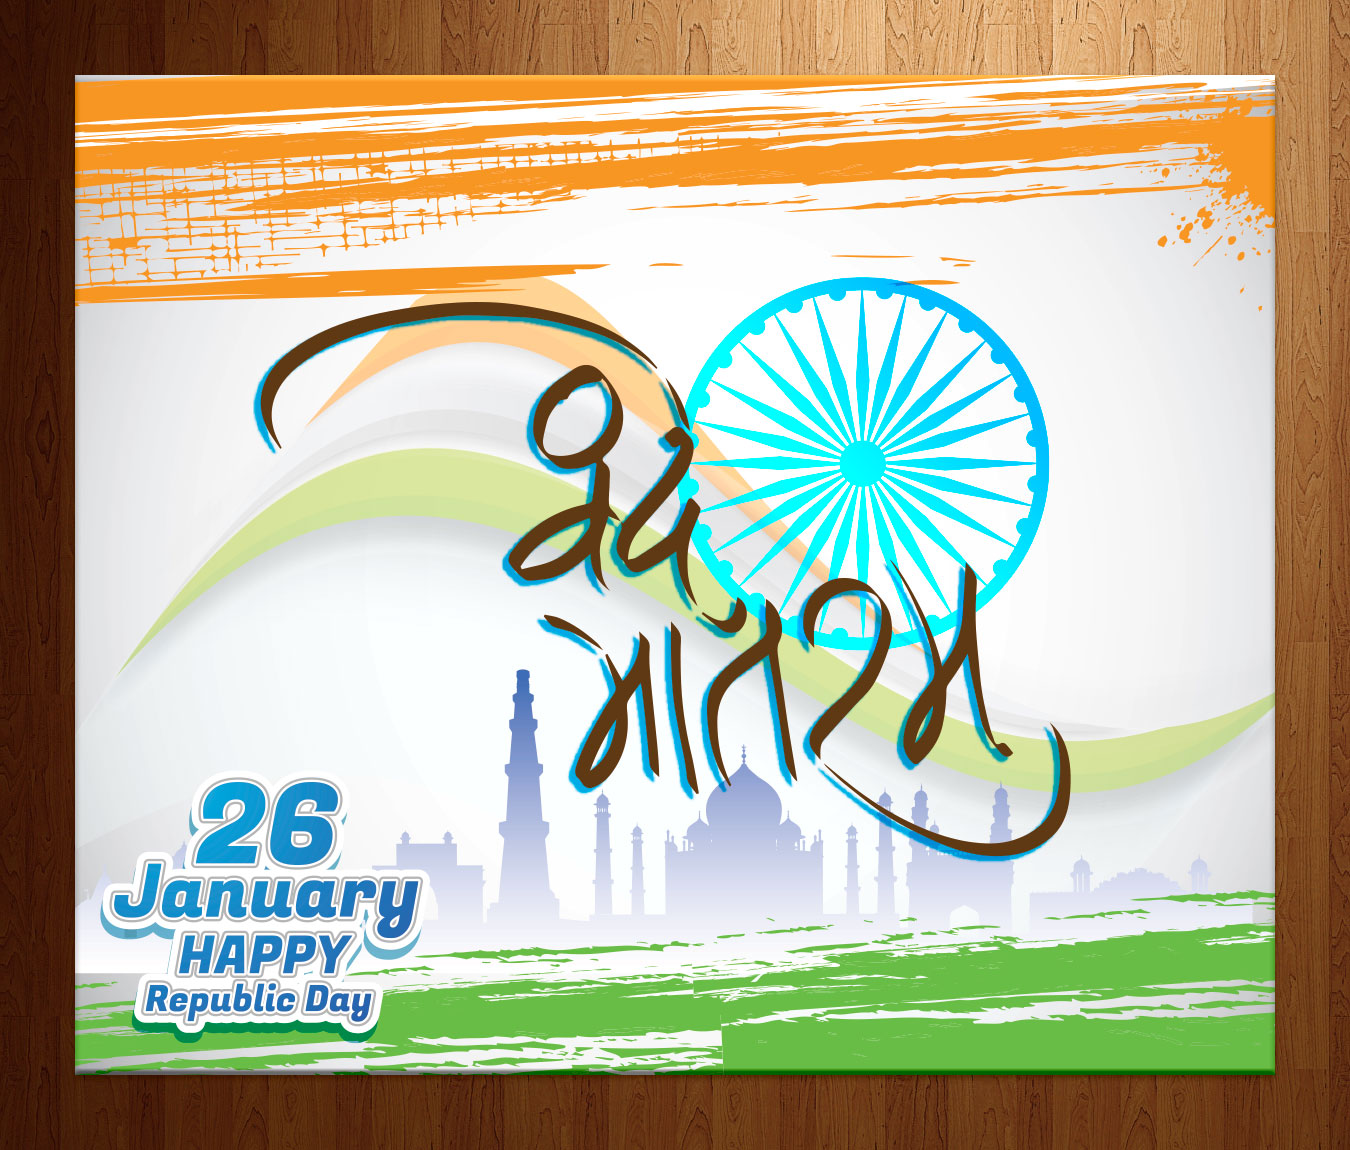 India Republic Day Images - Free Download on Freepik